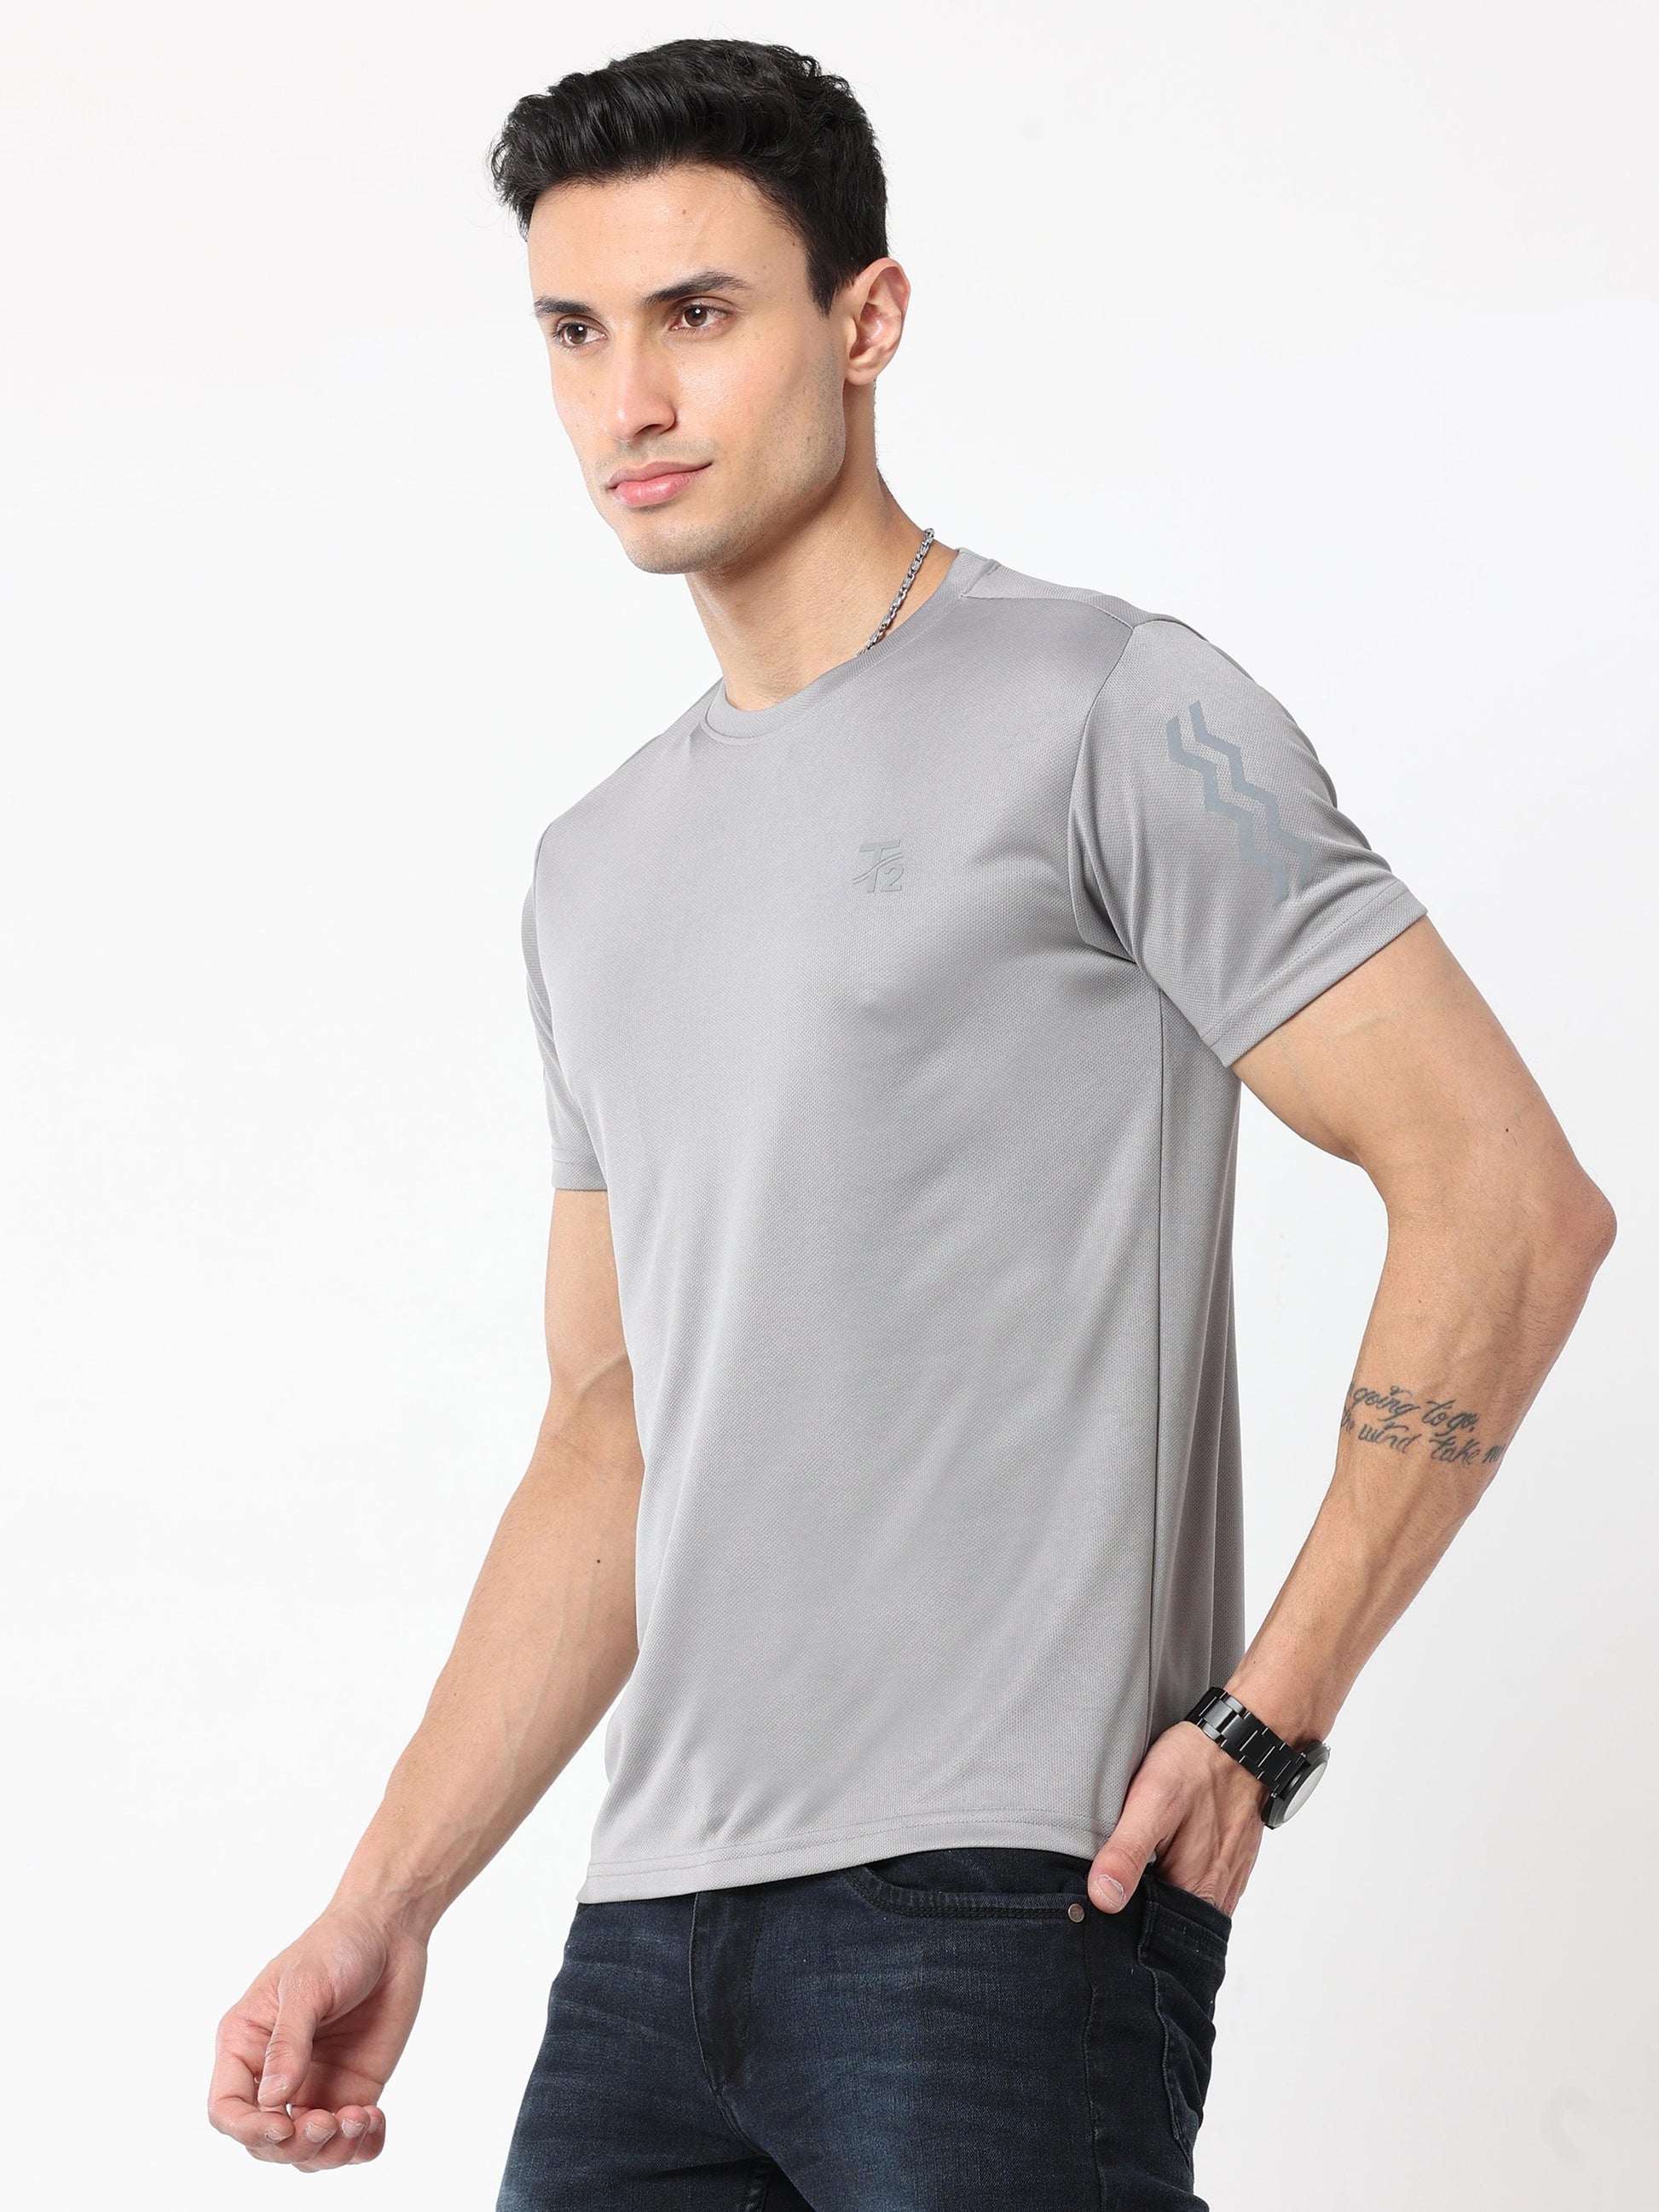 Athleisure Men's Premium T-Shirt – Grey